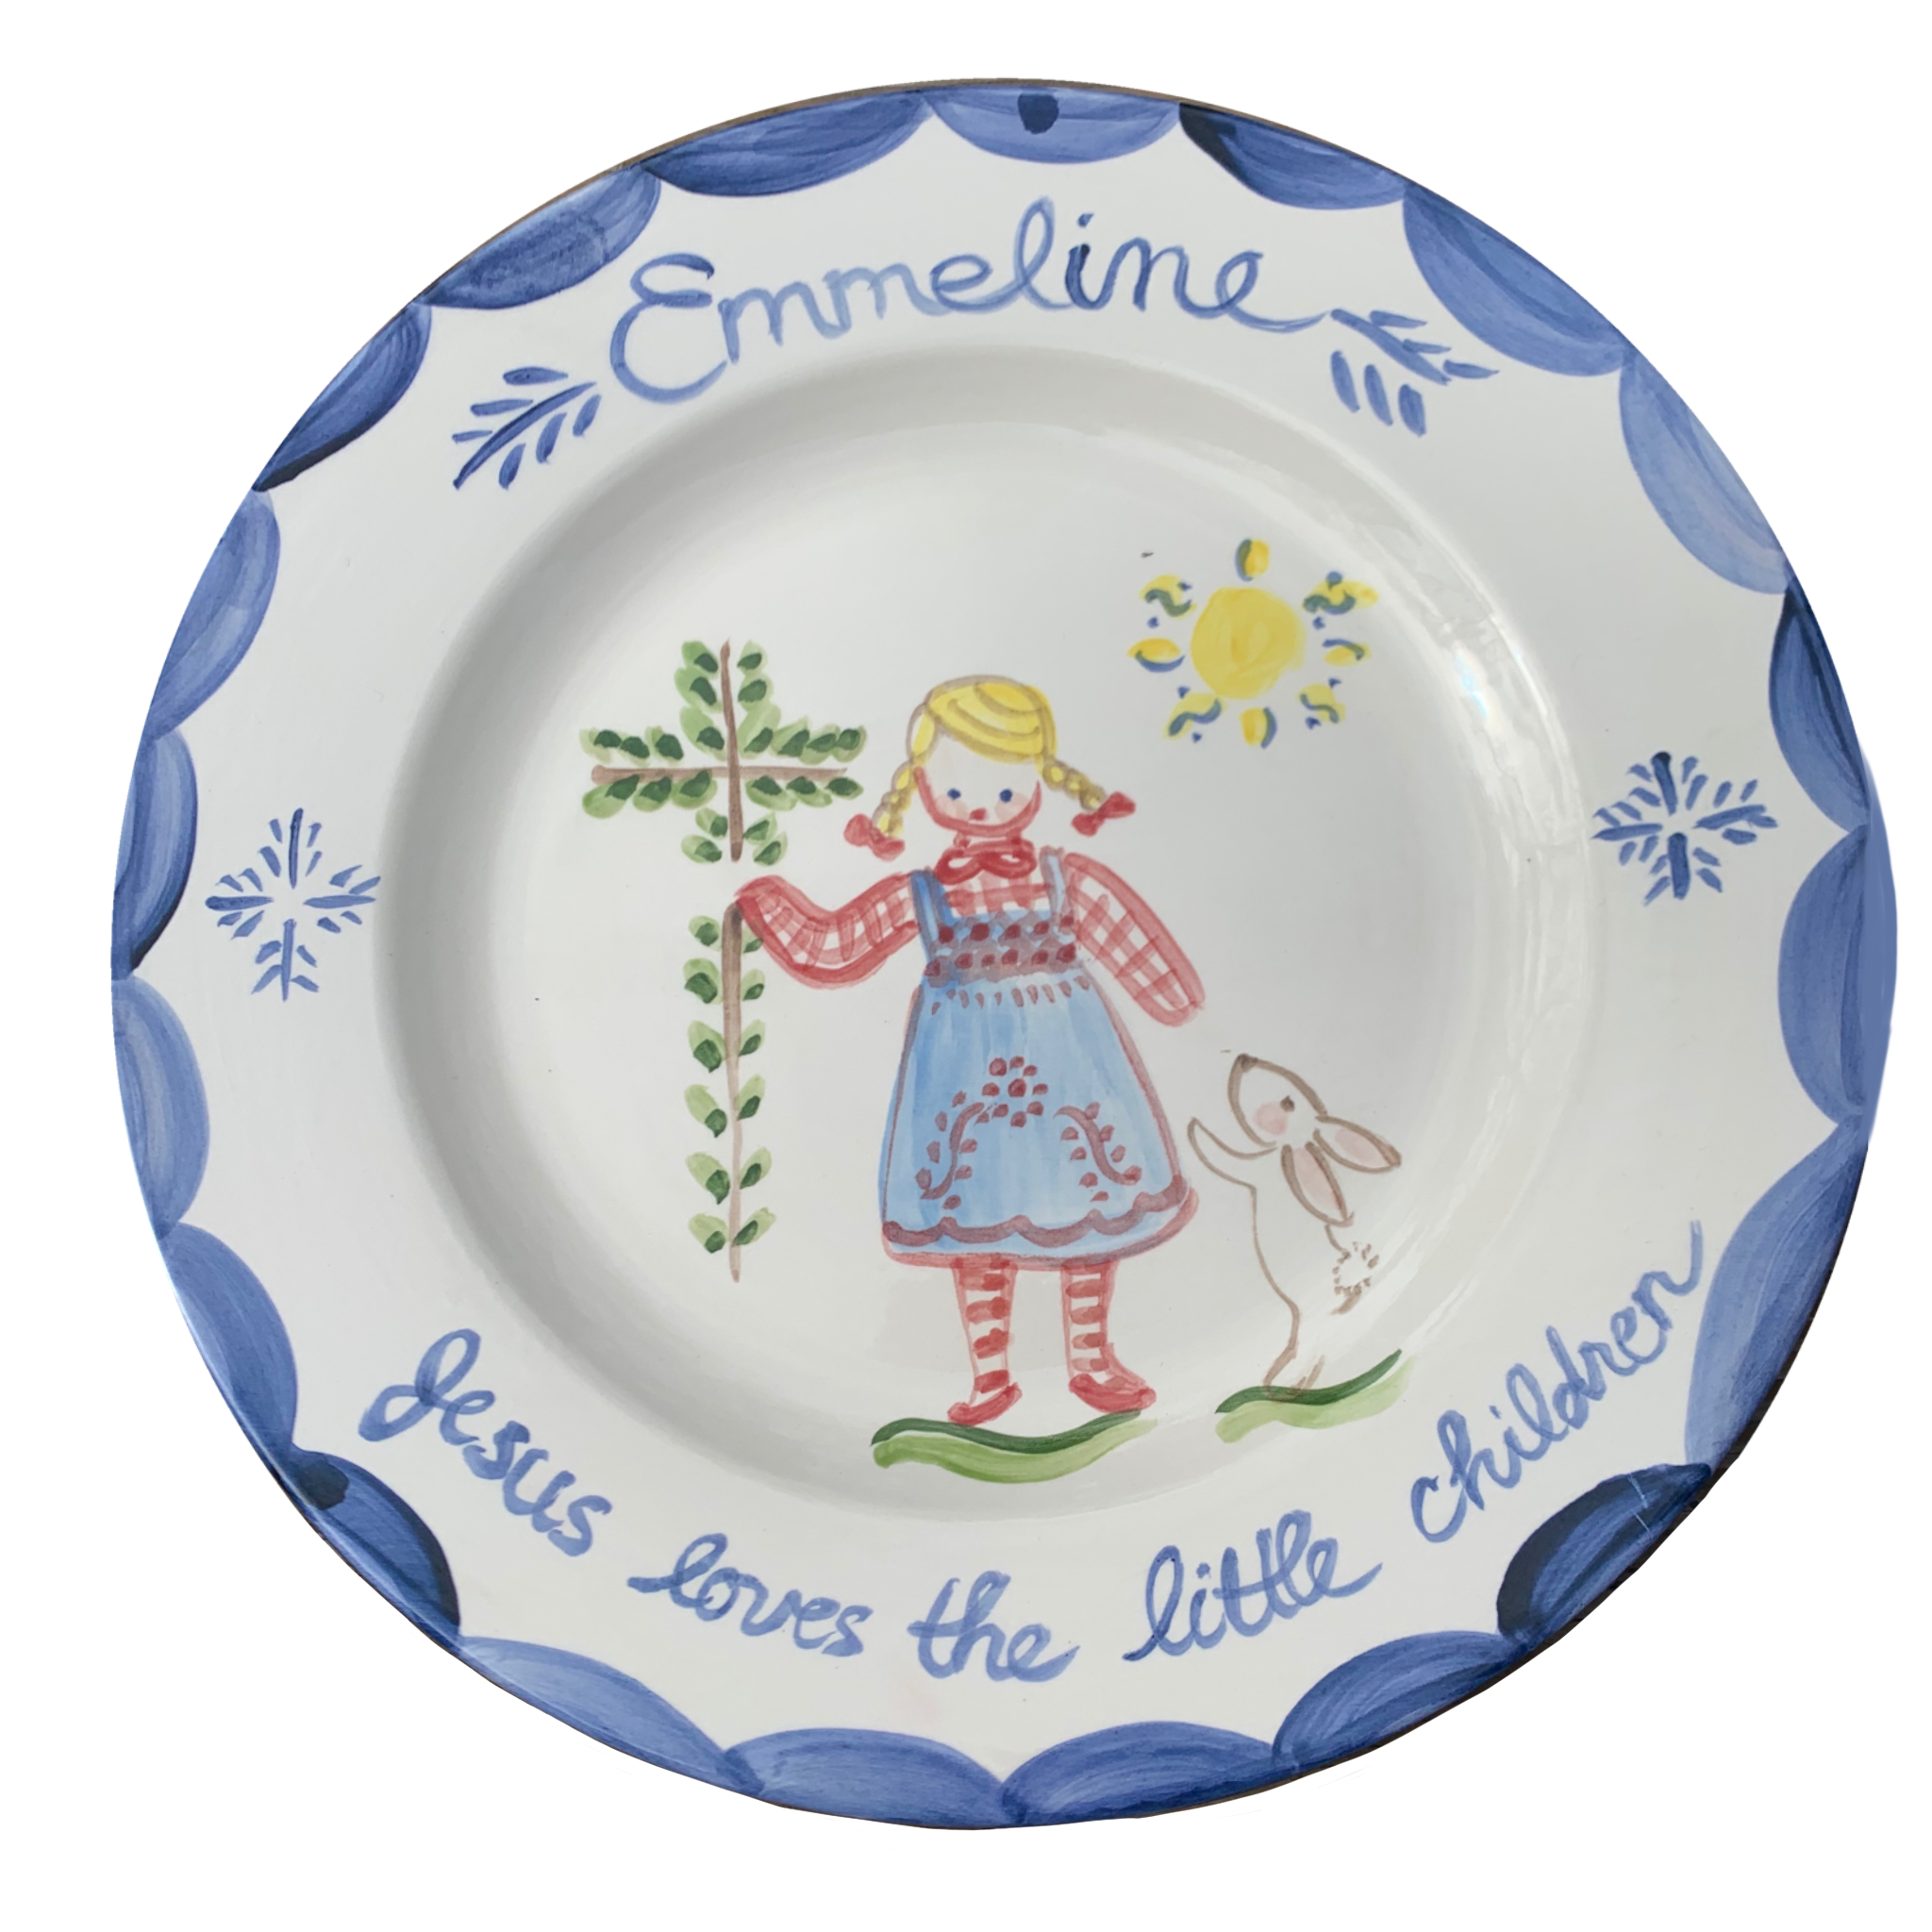 Jesus Loves the Little Children plate - Tricia Lowenfield Design